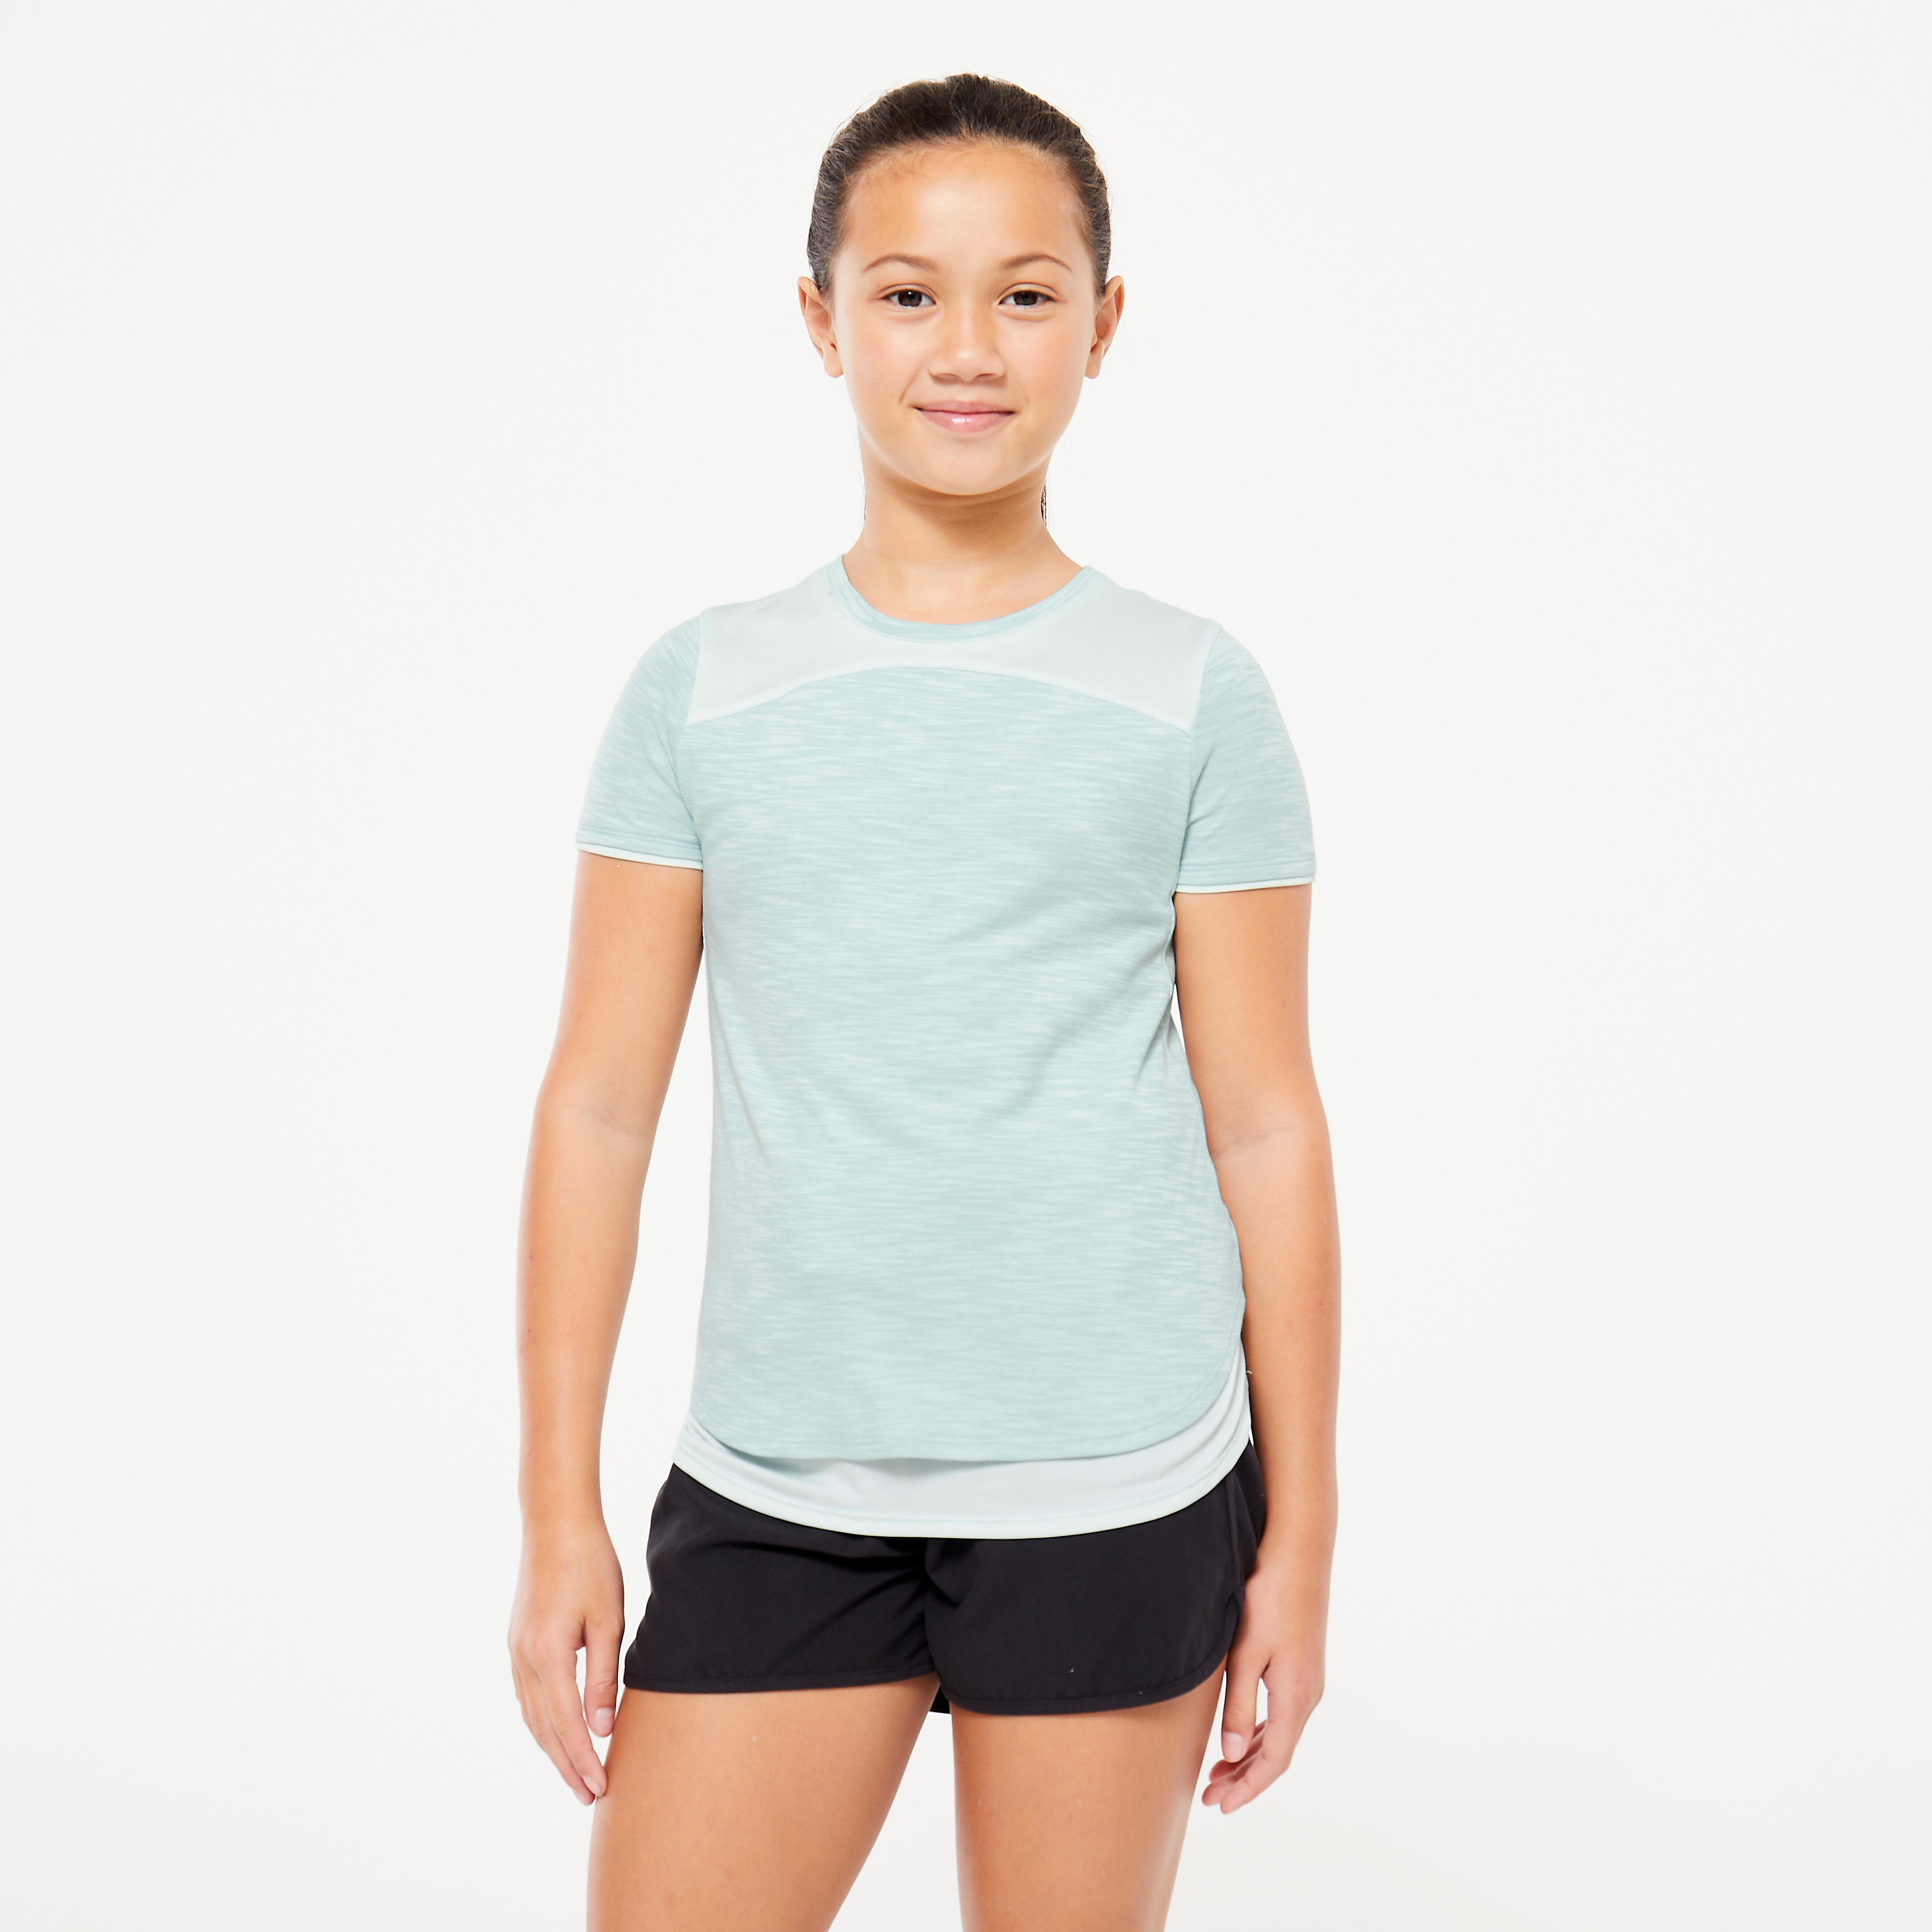 Decathlon | T-shirt bambina ginnastica 2 in 1 misto cotone turchese |  Domyos